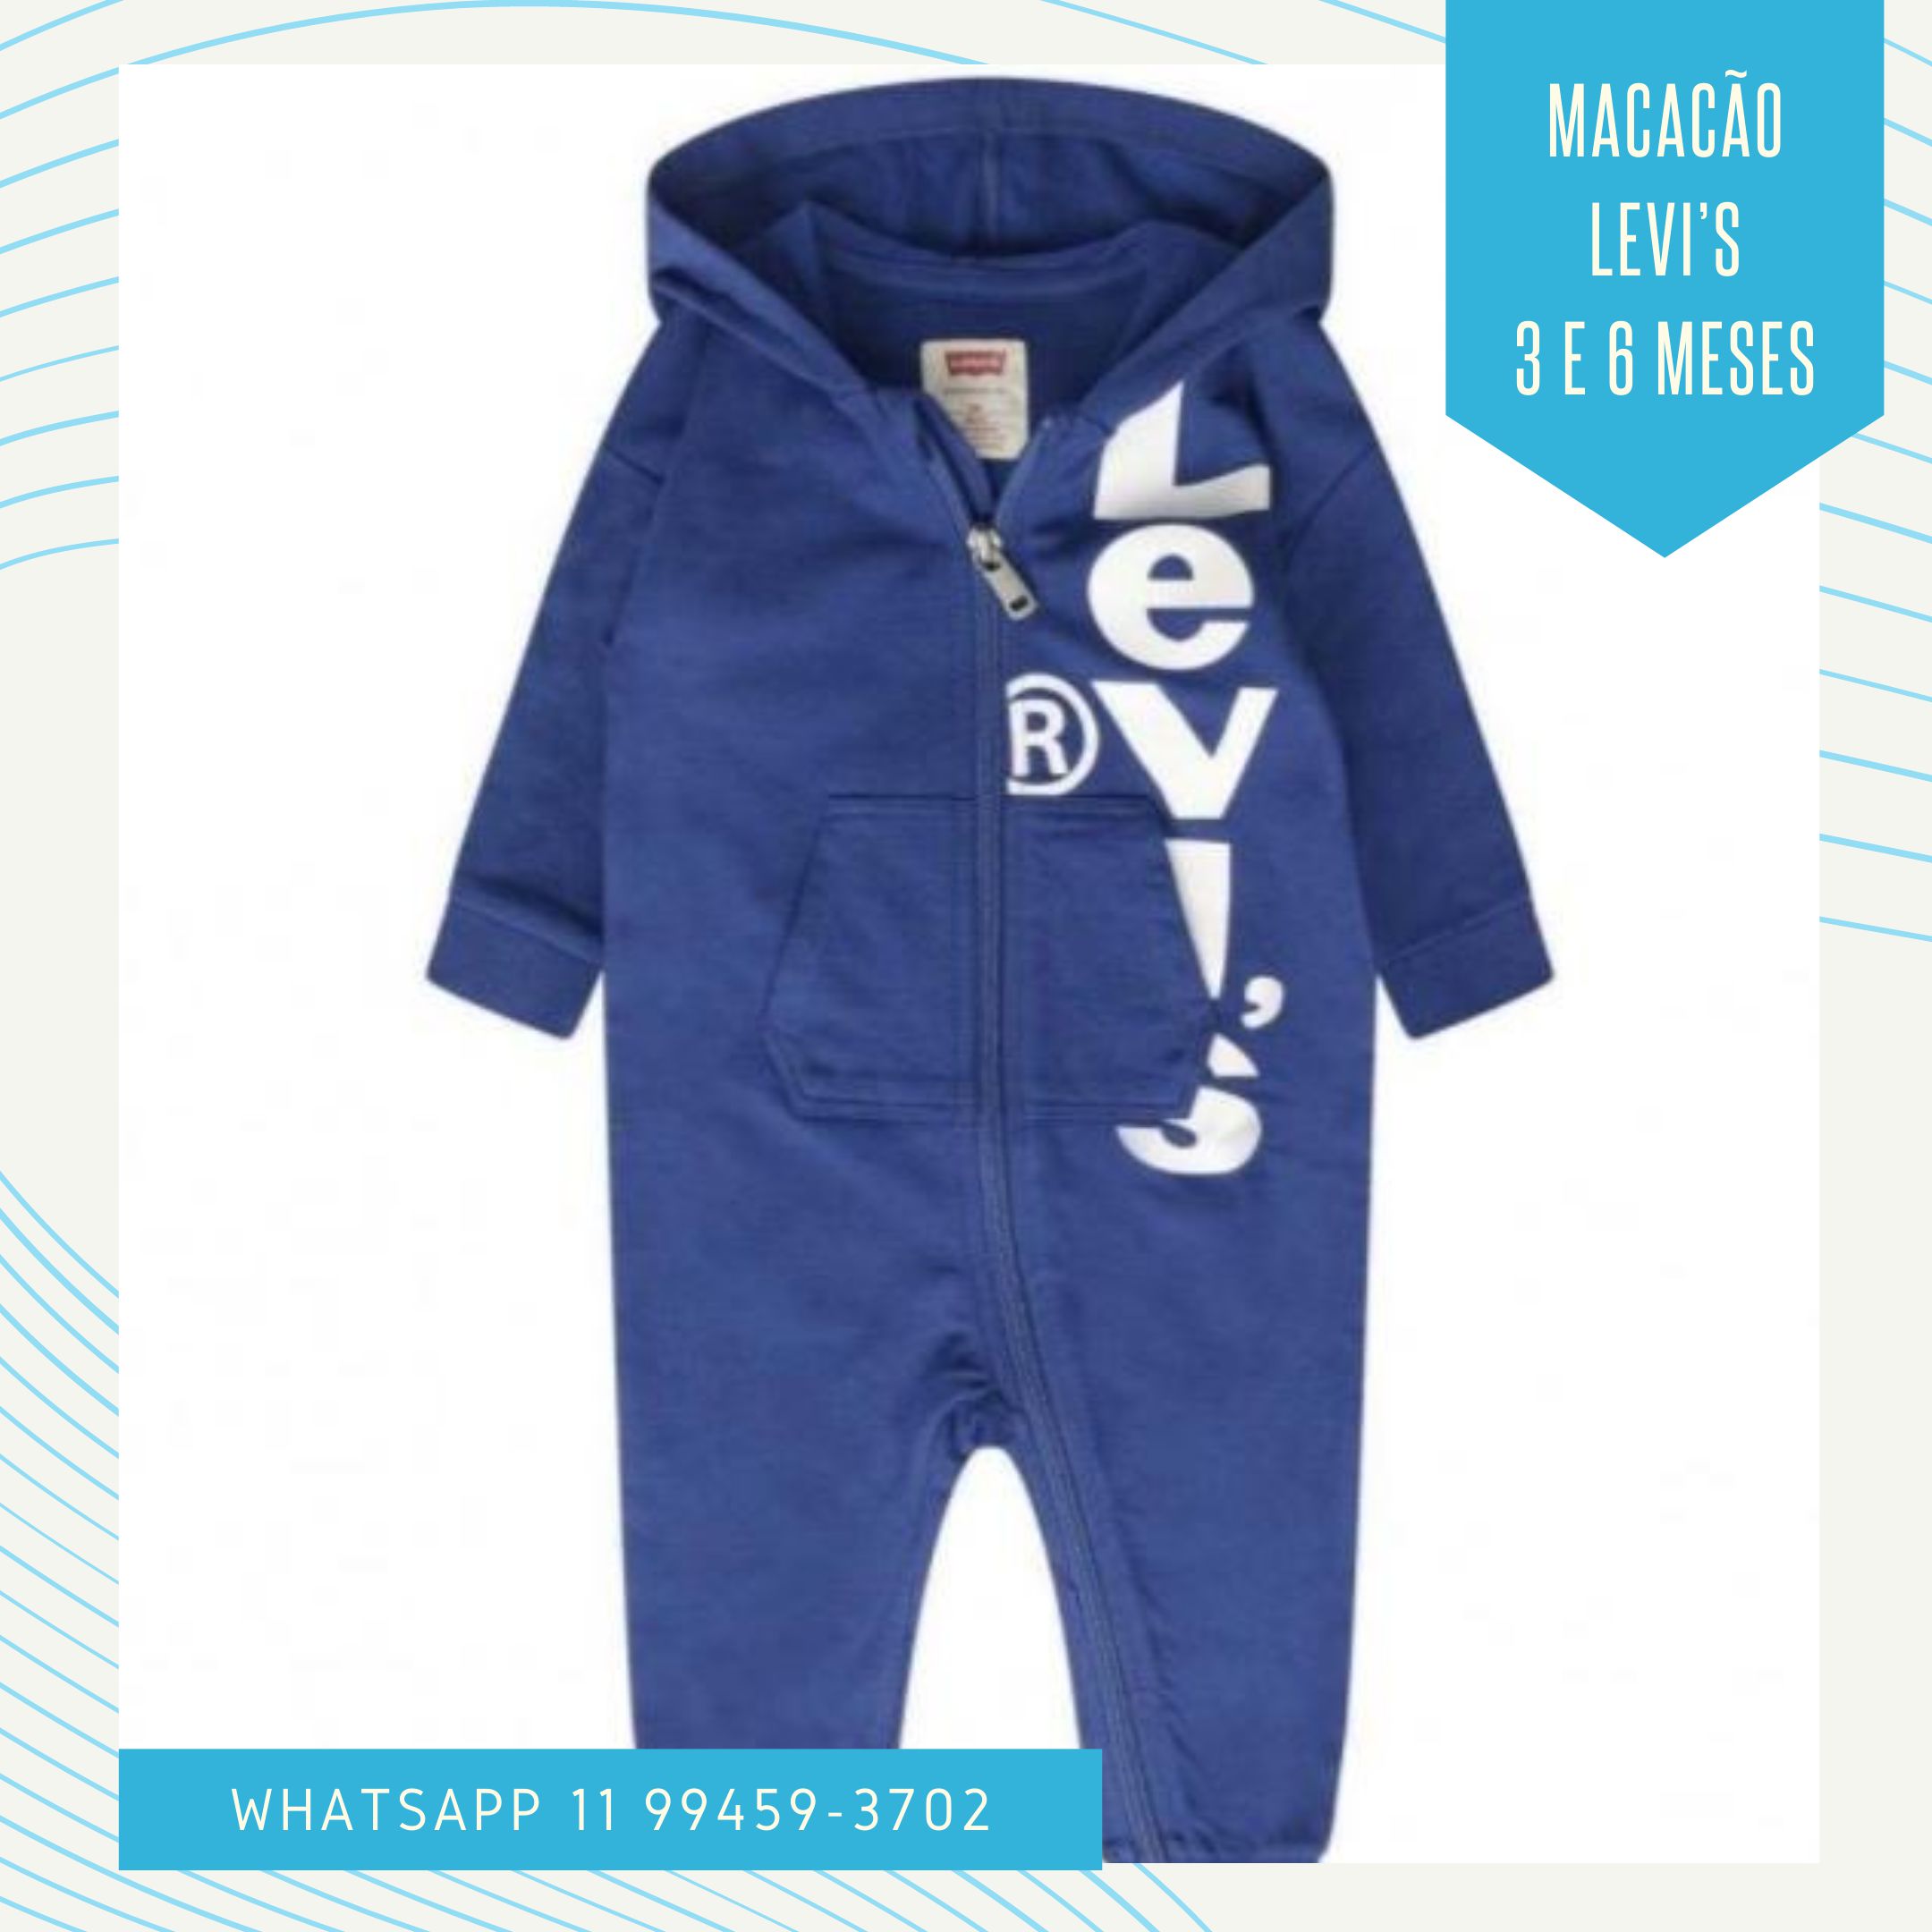 Macacão de bebê Levi's - Baby Buys Brasil